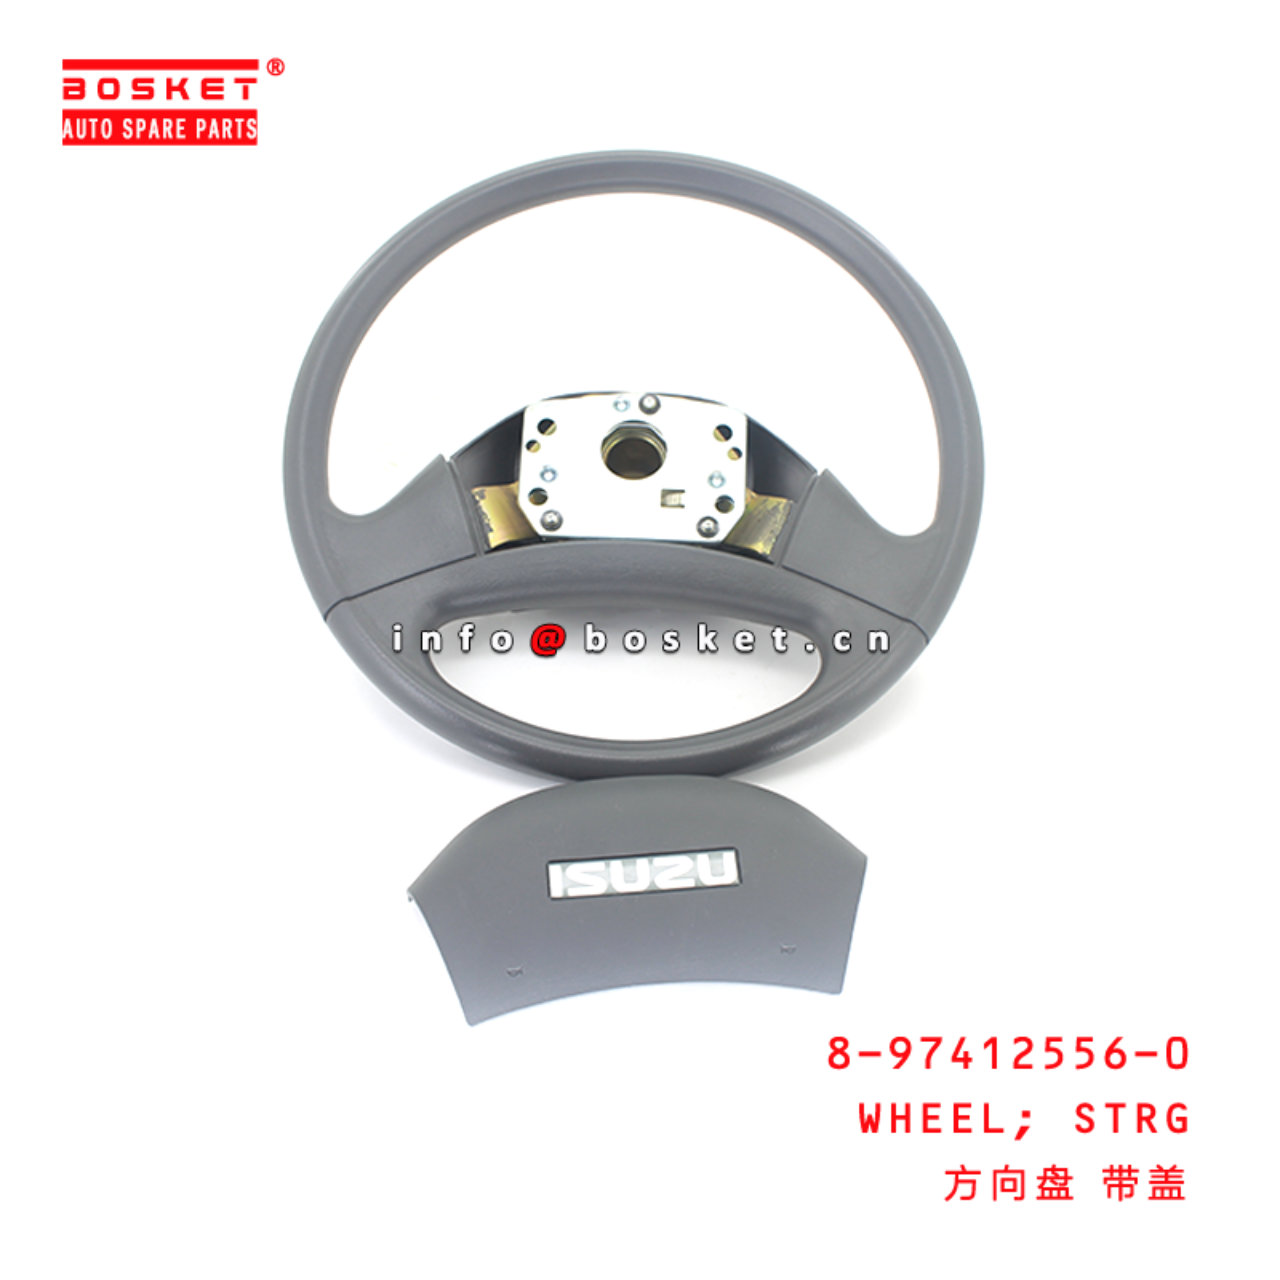 8-97412556-0 Steering Wheel Suitable for ISUZU 700P  8974125560